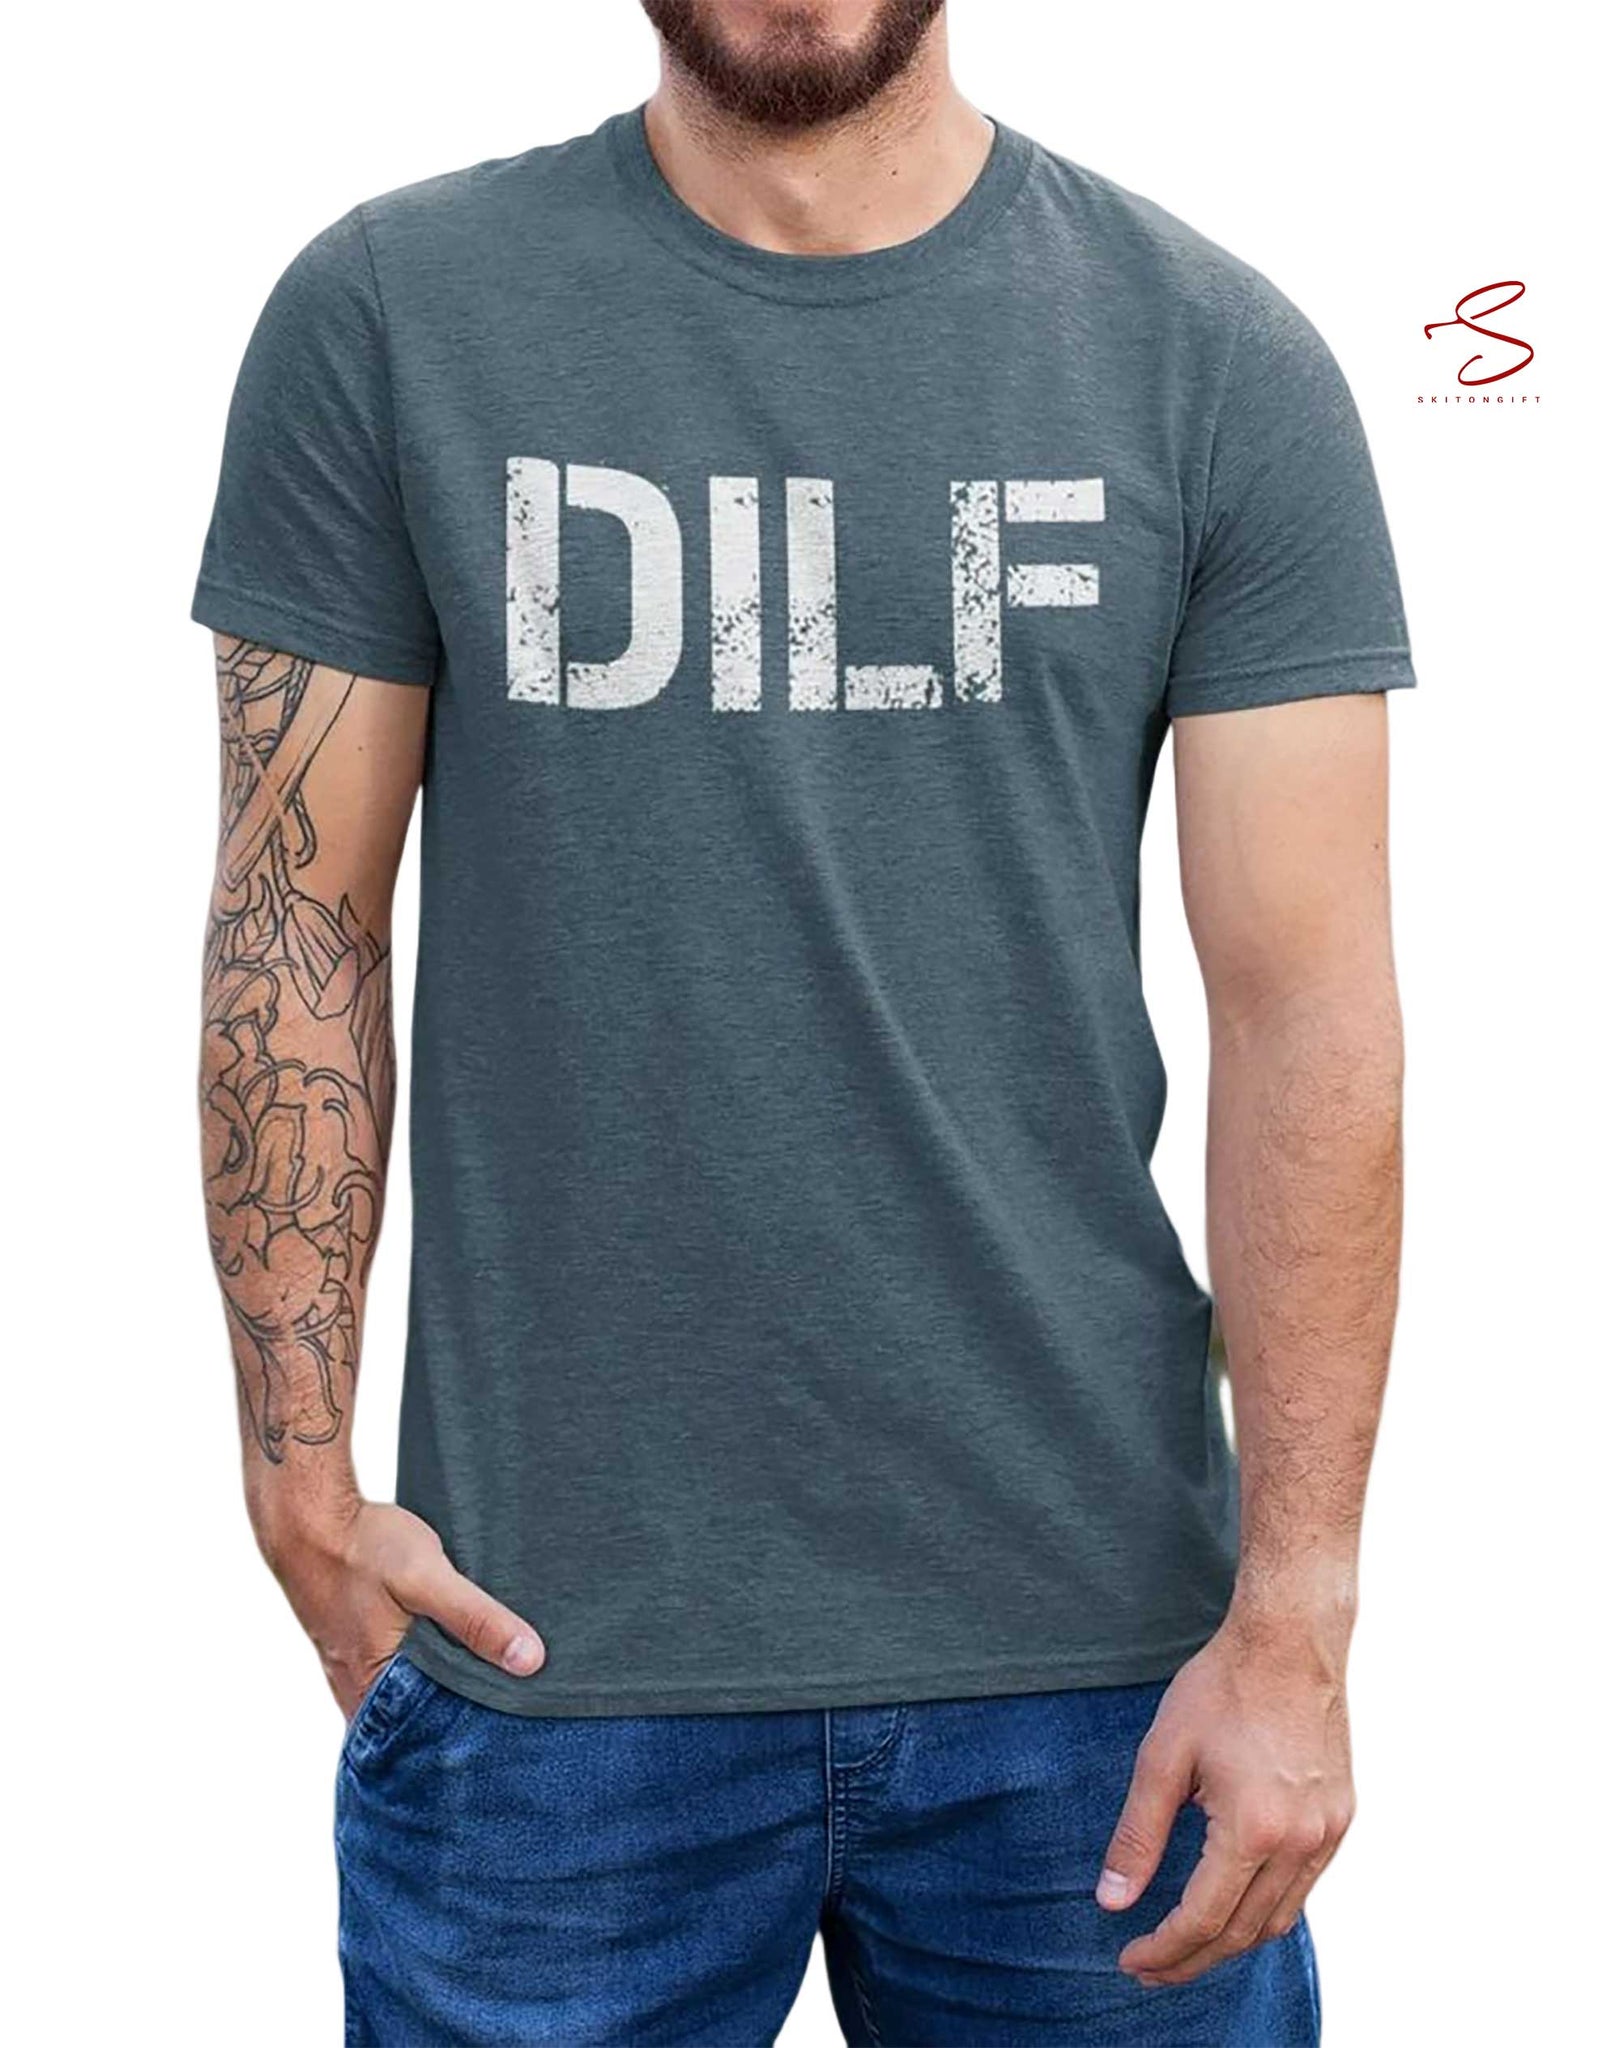 Skitongift Dilf Tshirt Funny Shirt For Him Dad Shirt Gift For Husband Shirt For Him Funny Shirts Long Sleeve Tee Hoody Hoodie